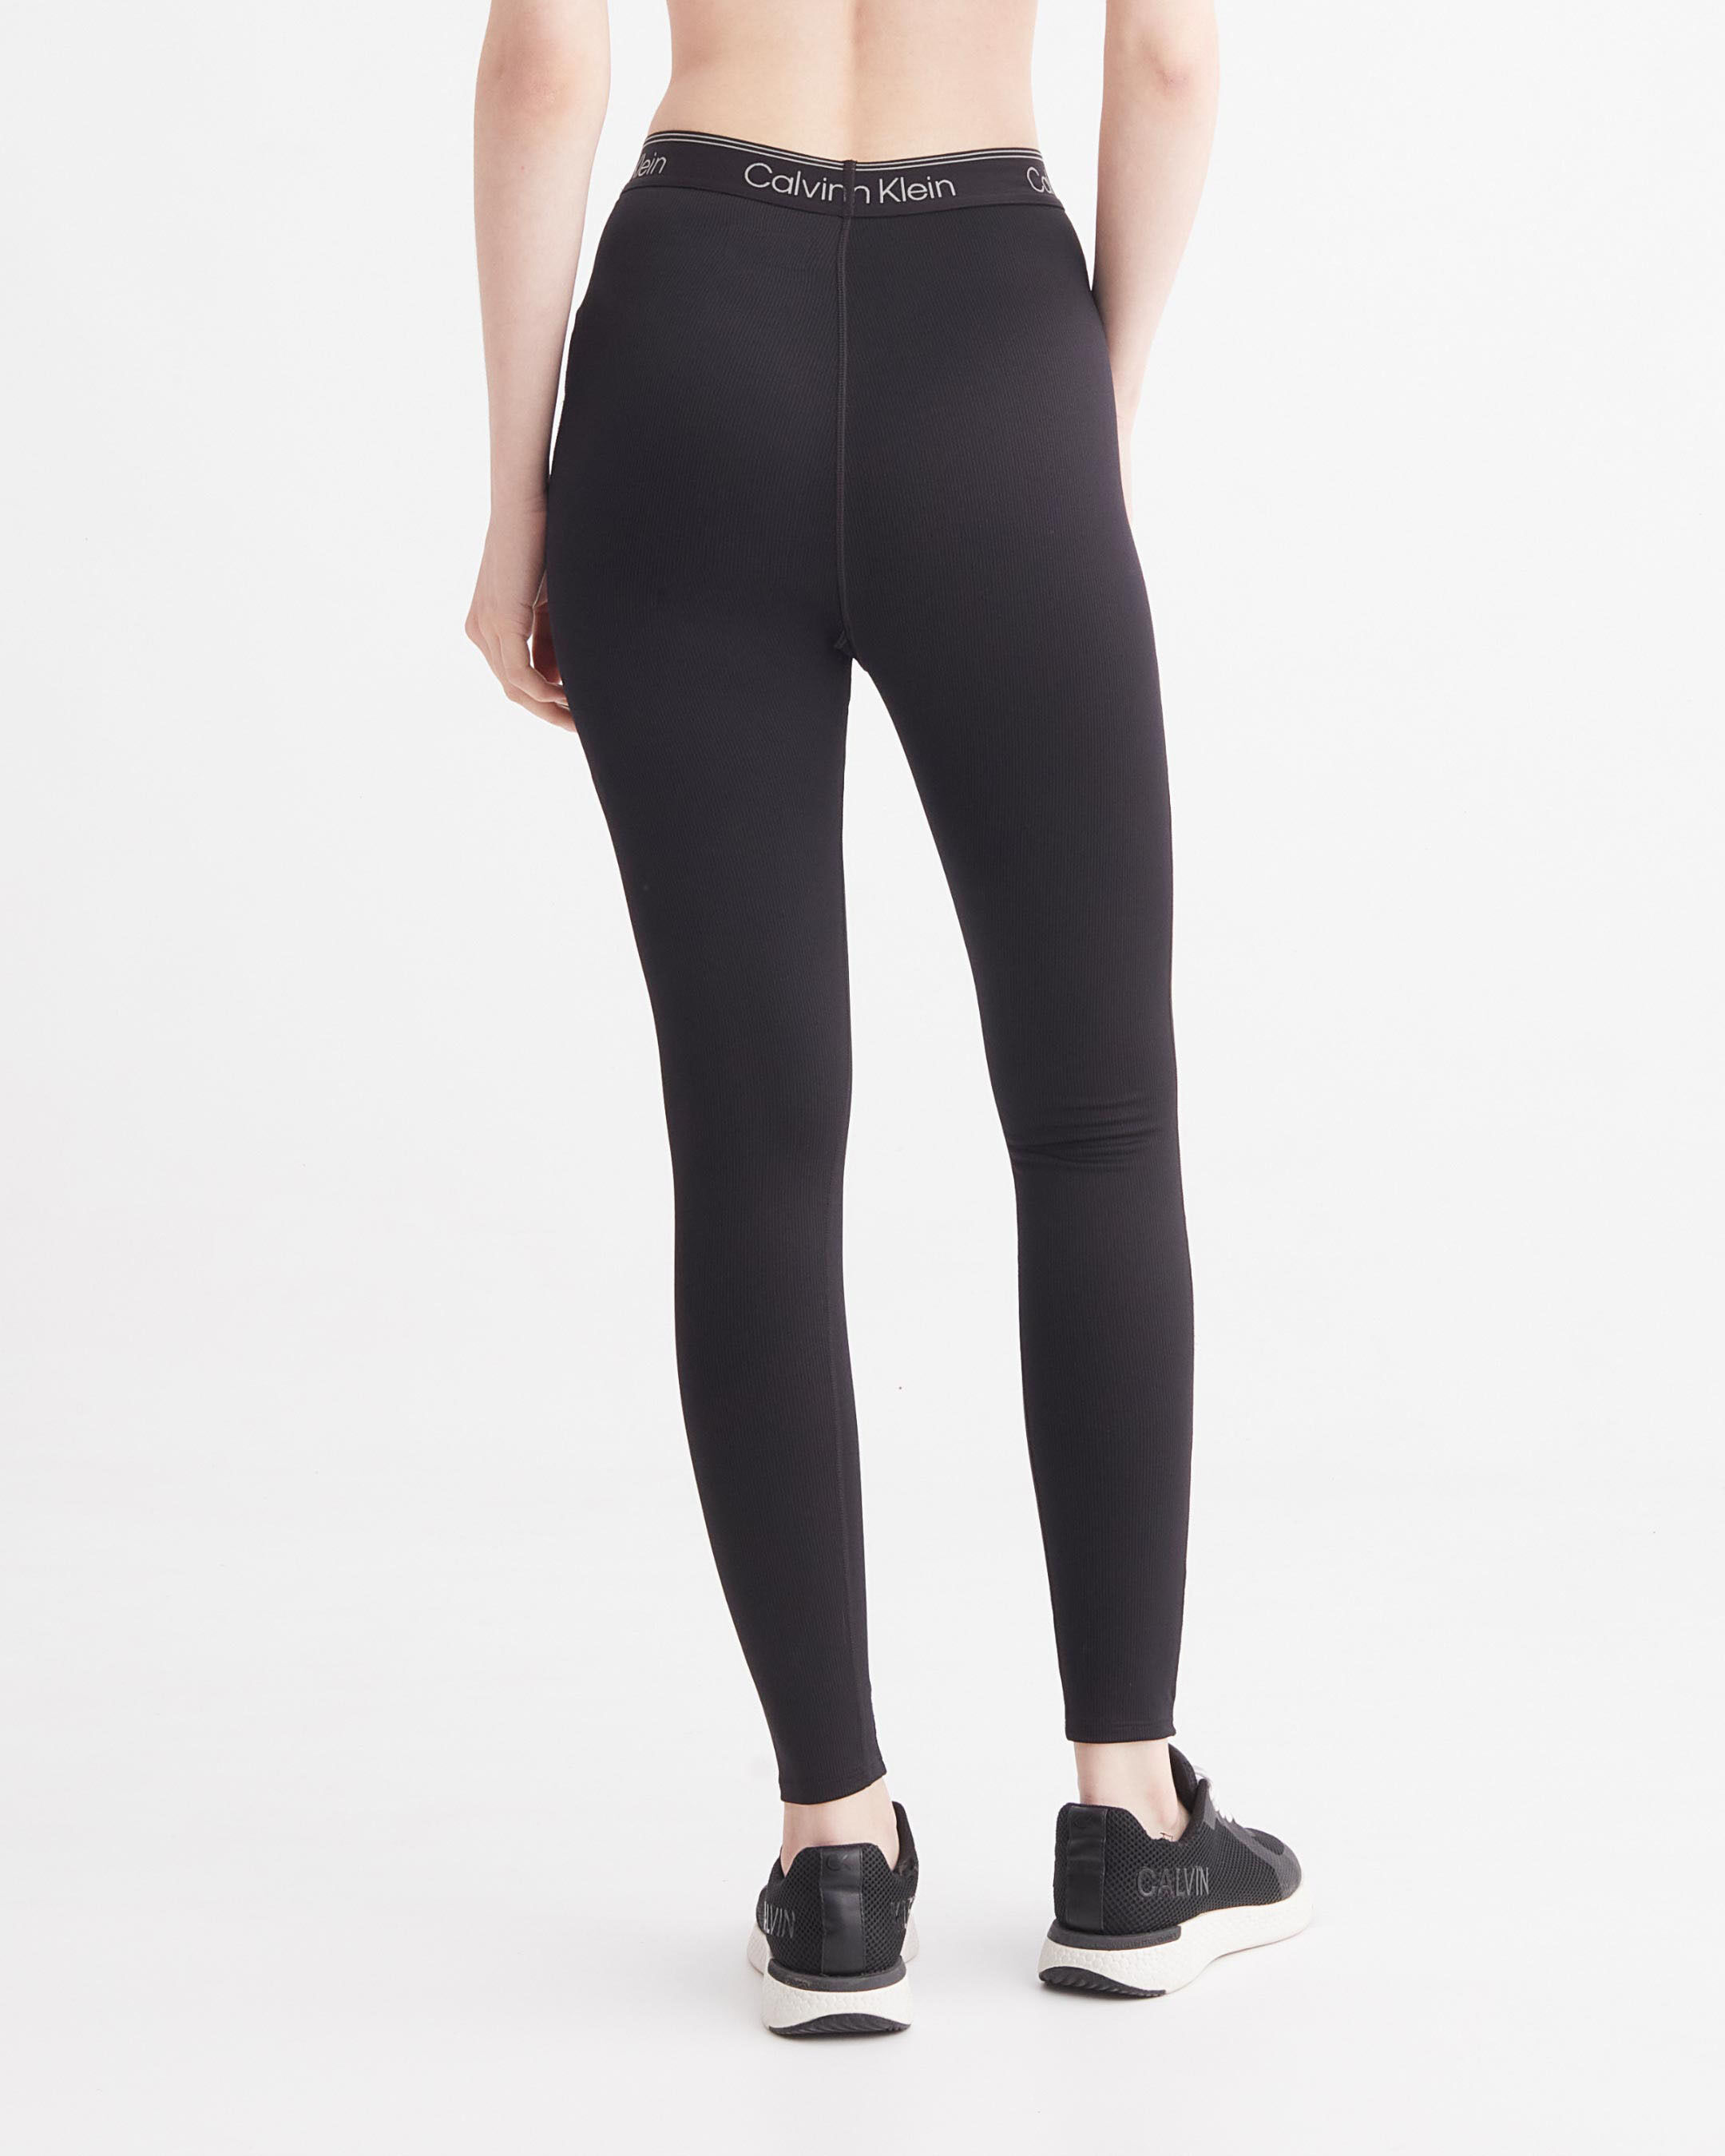 Calvin Klein Performance High-Waist Leggings--Size & Color::Variety--NWT |  eBay